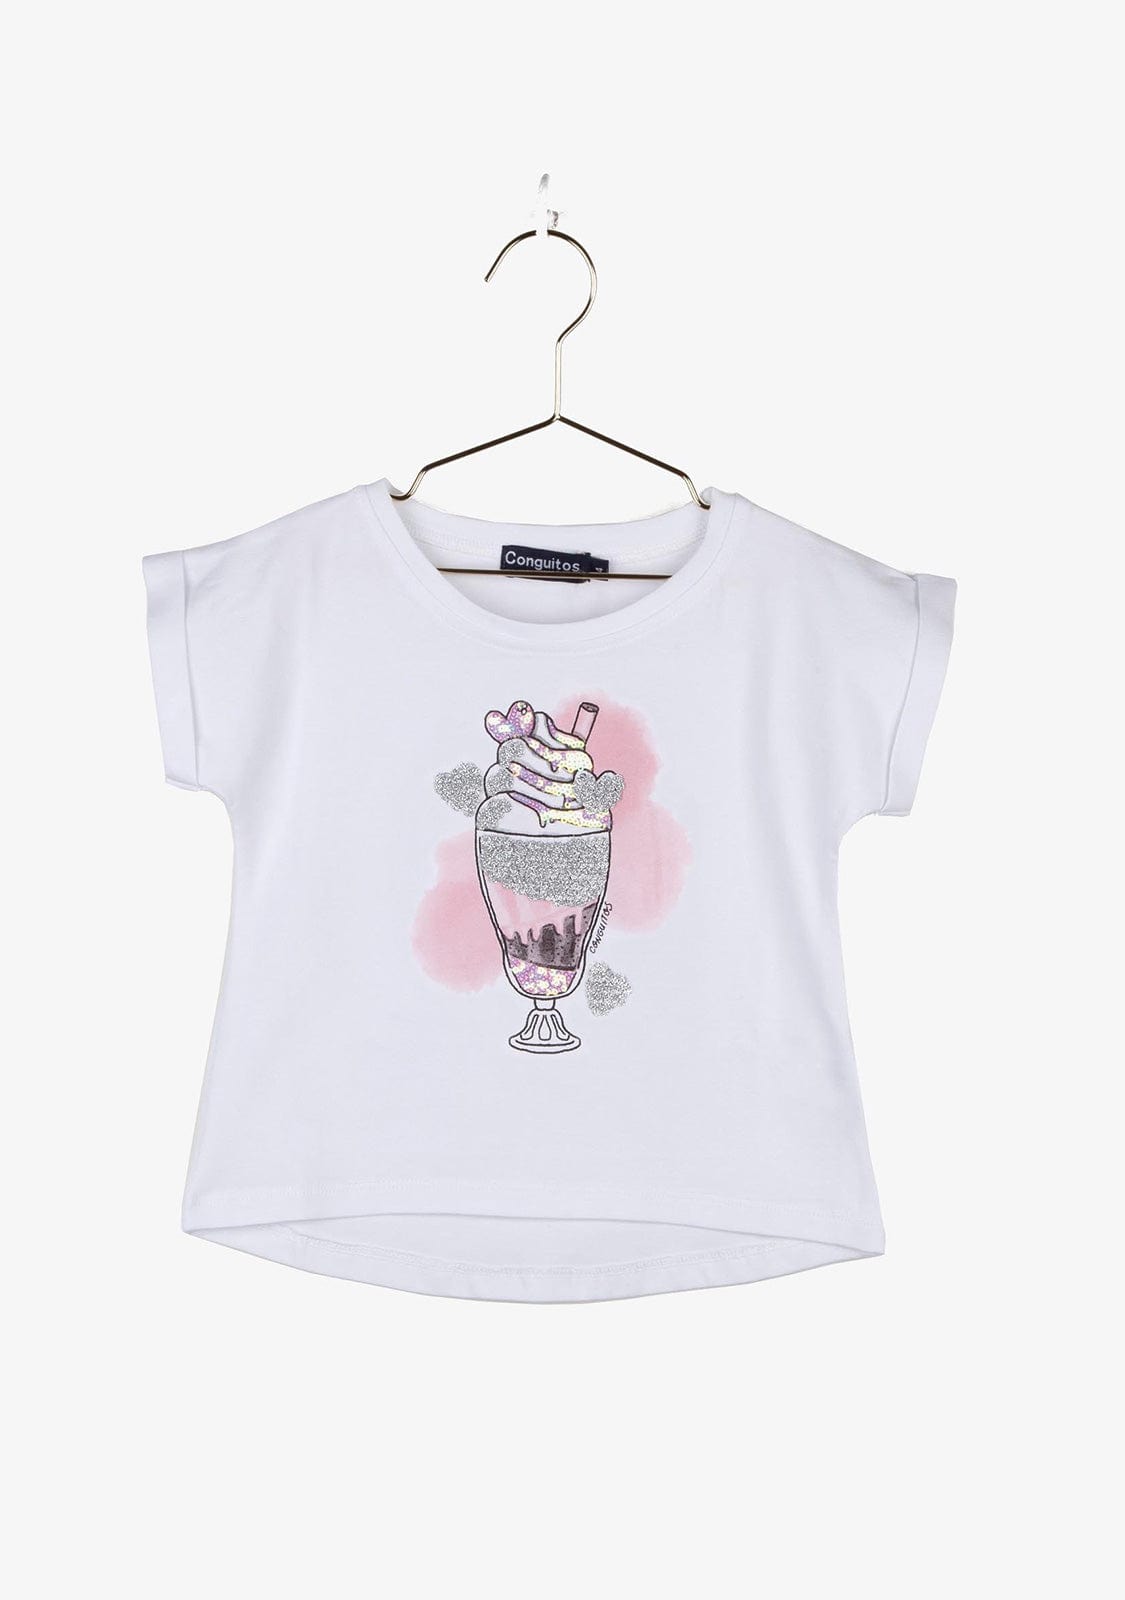 CONGUITOS TEXTIL Clothing Girl's "Ice Cream" T-shirt